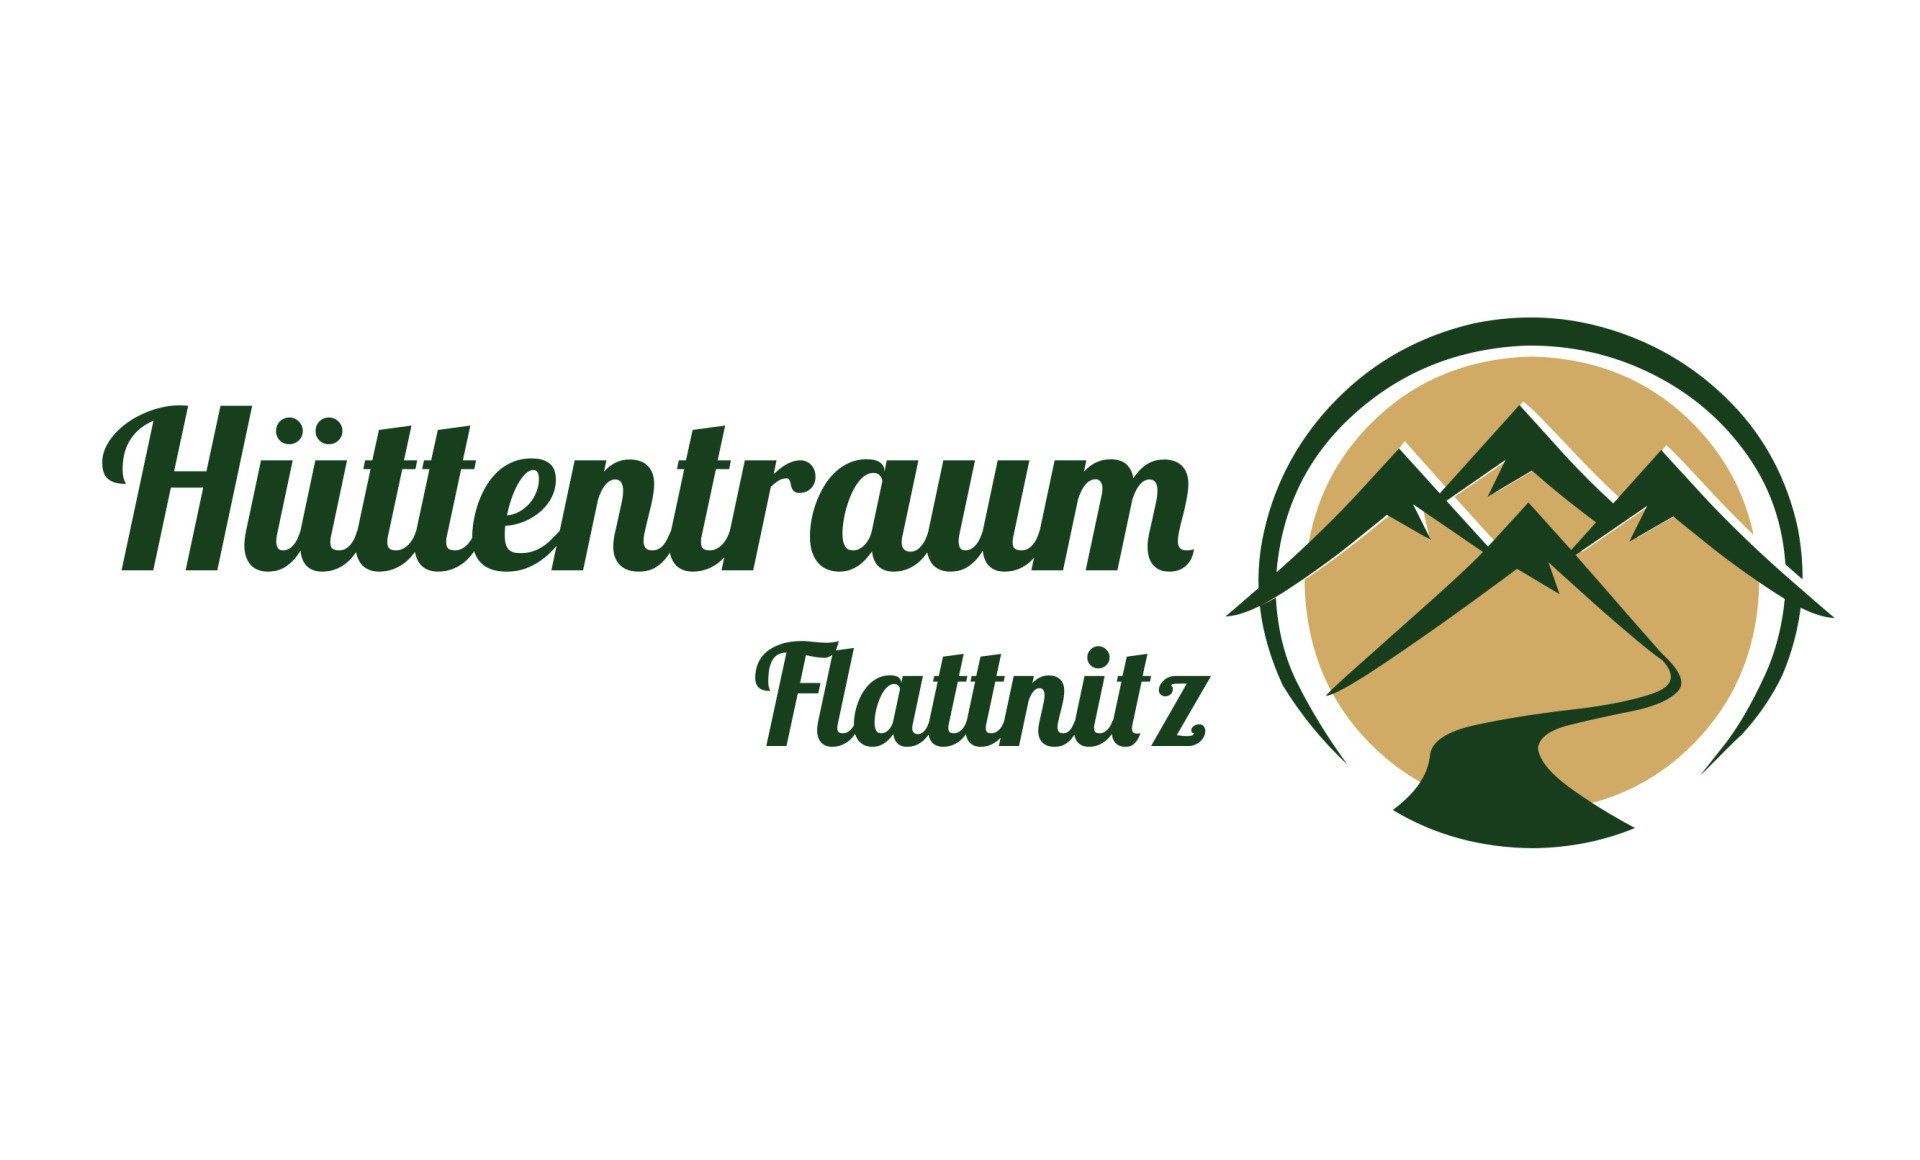 Hüttentraum Flattnitz